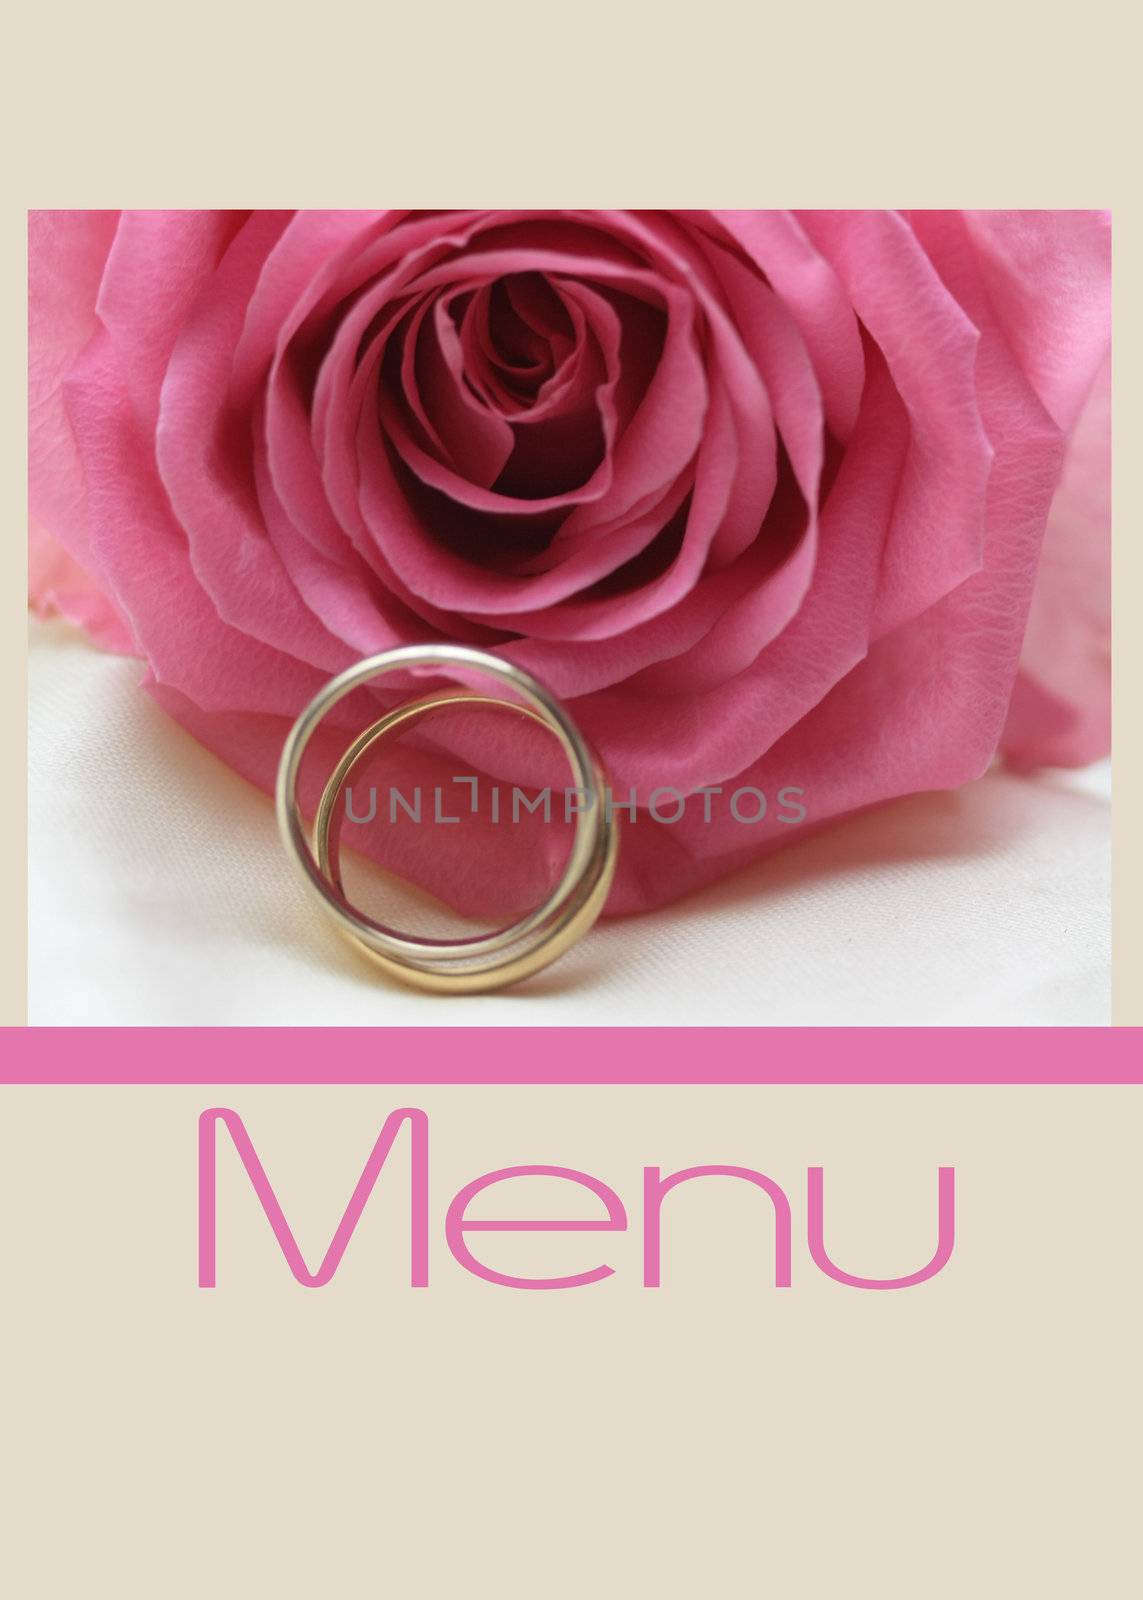 pink rose menu card by studioportosabbia